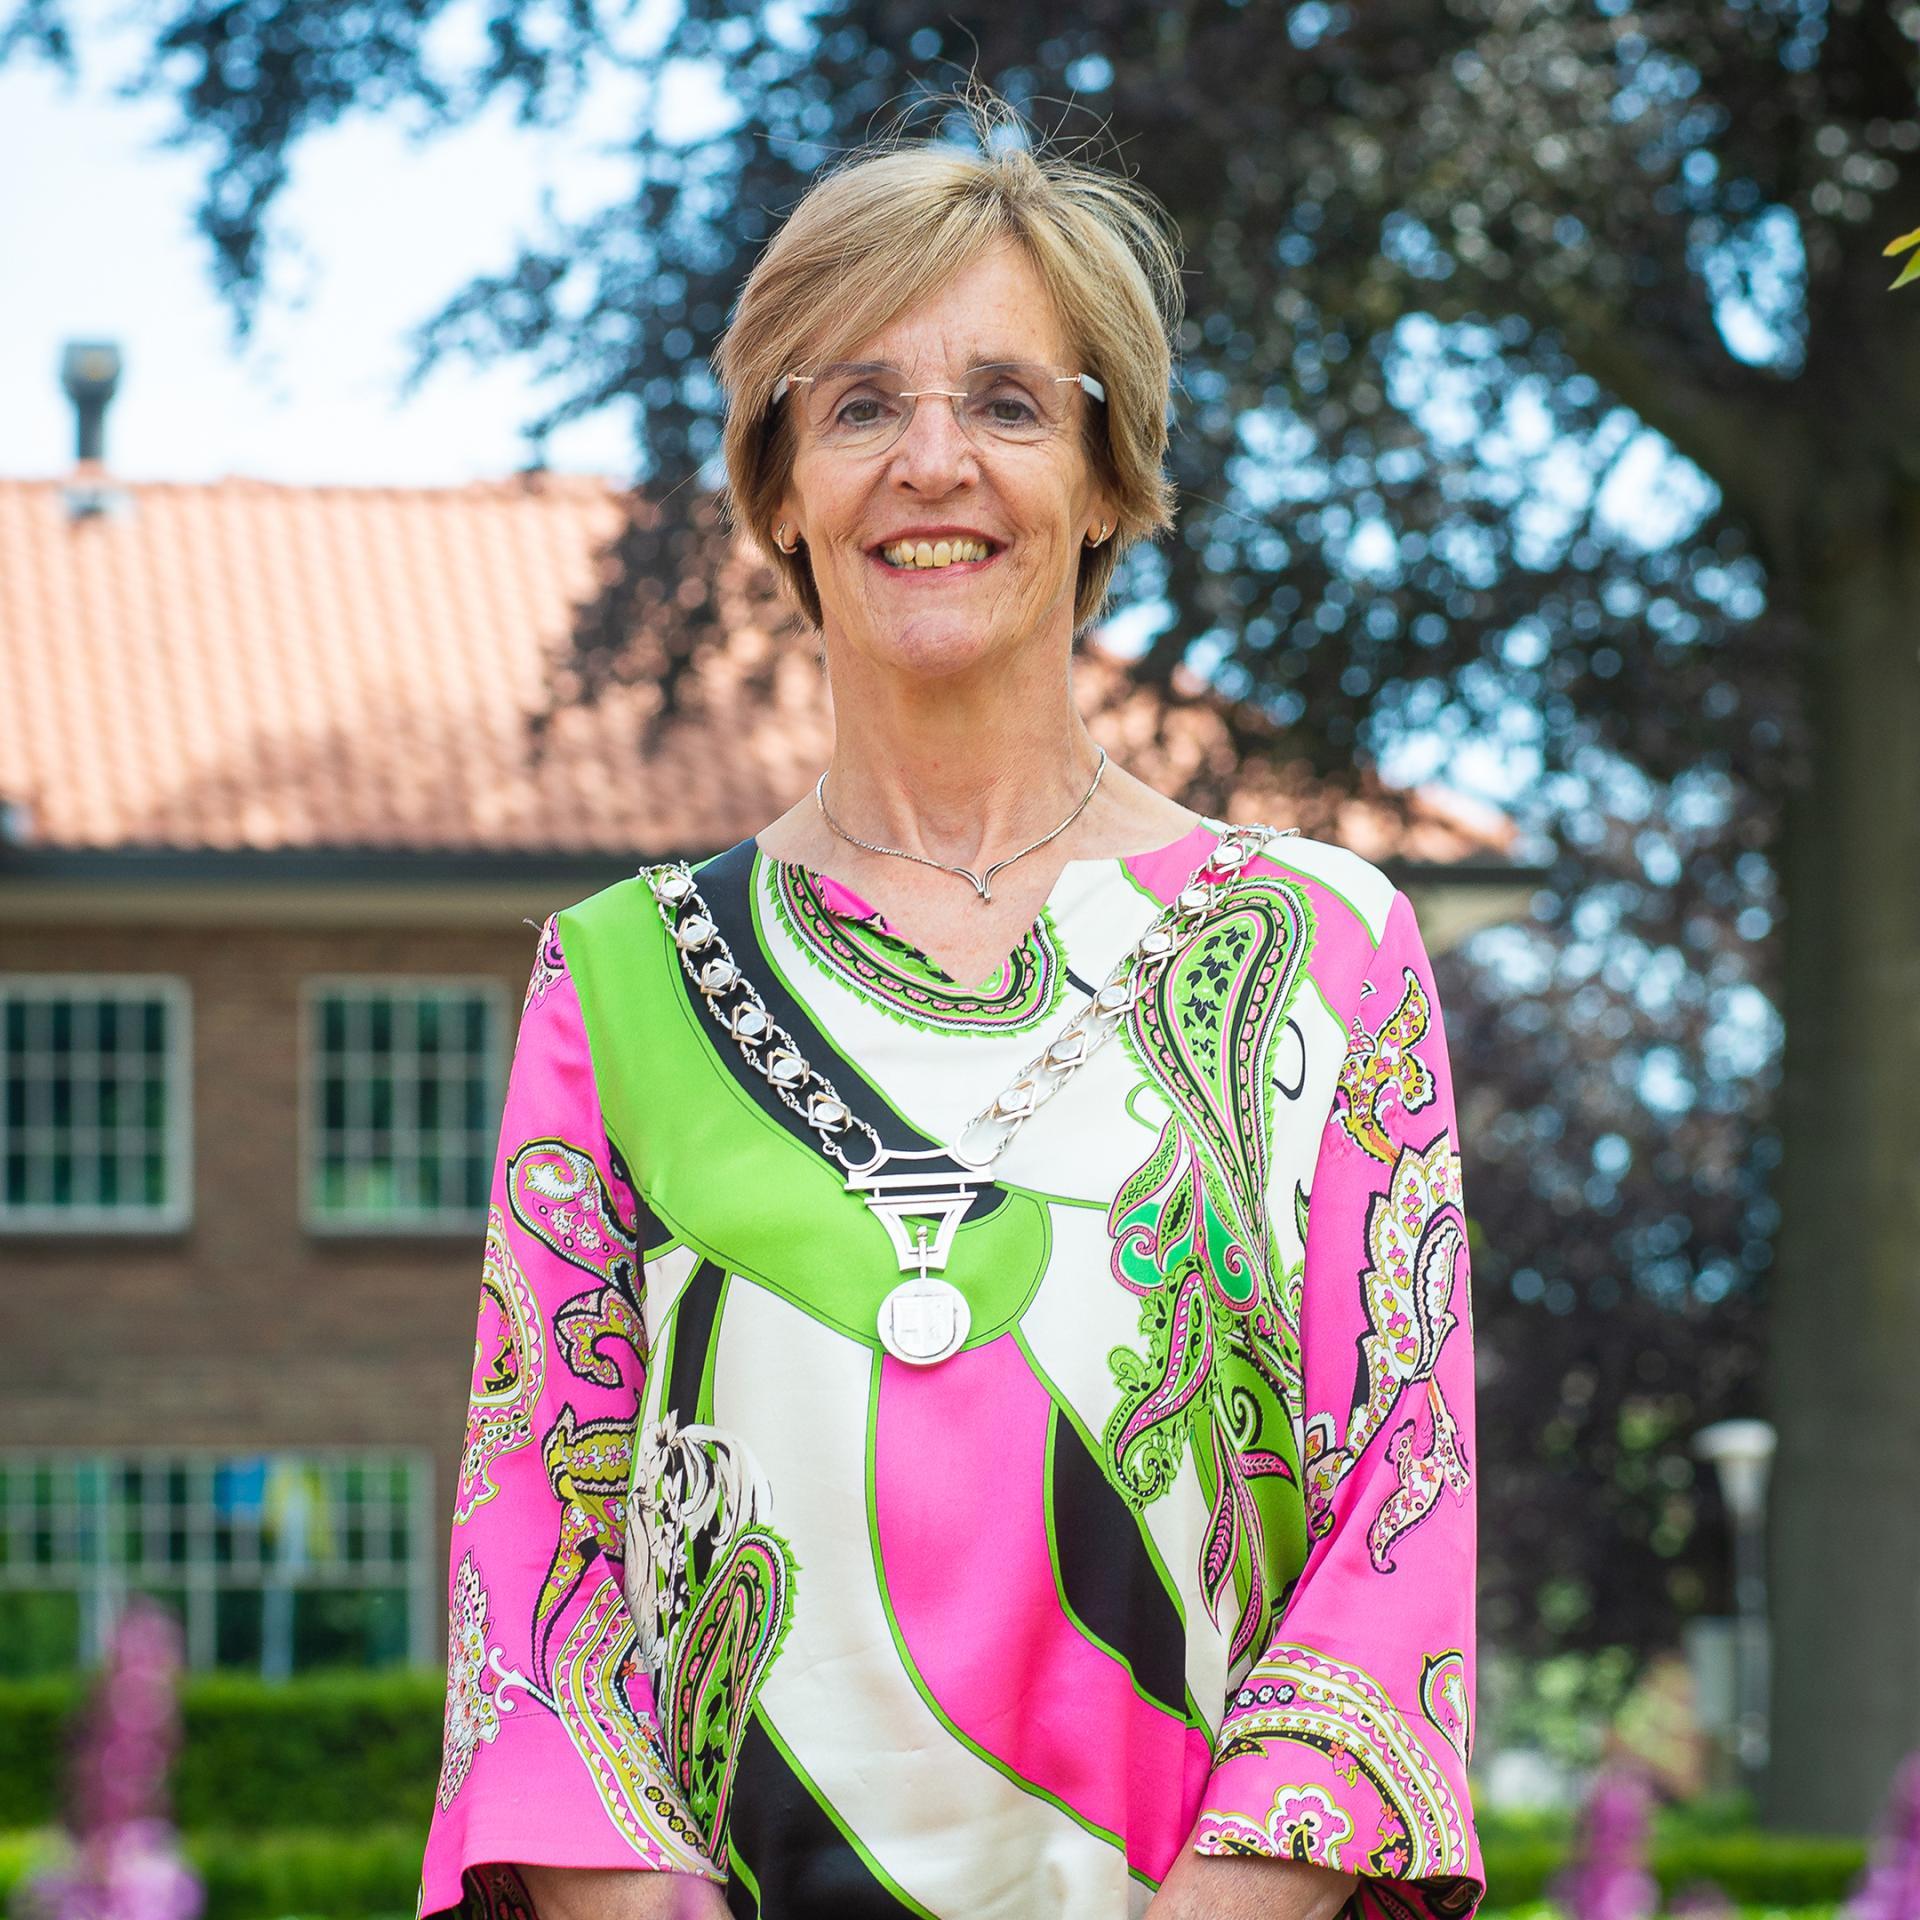 Burgemeester Annette Bronsvoort